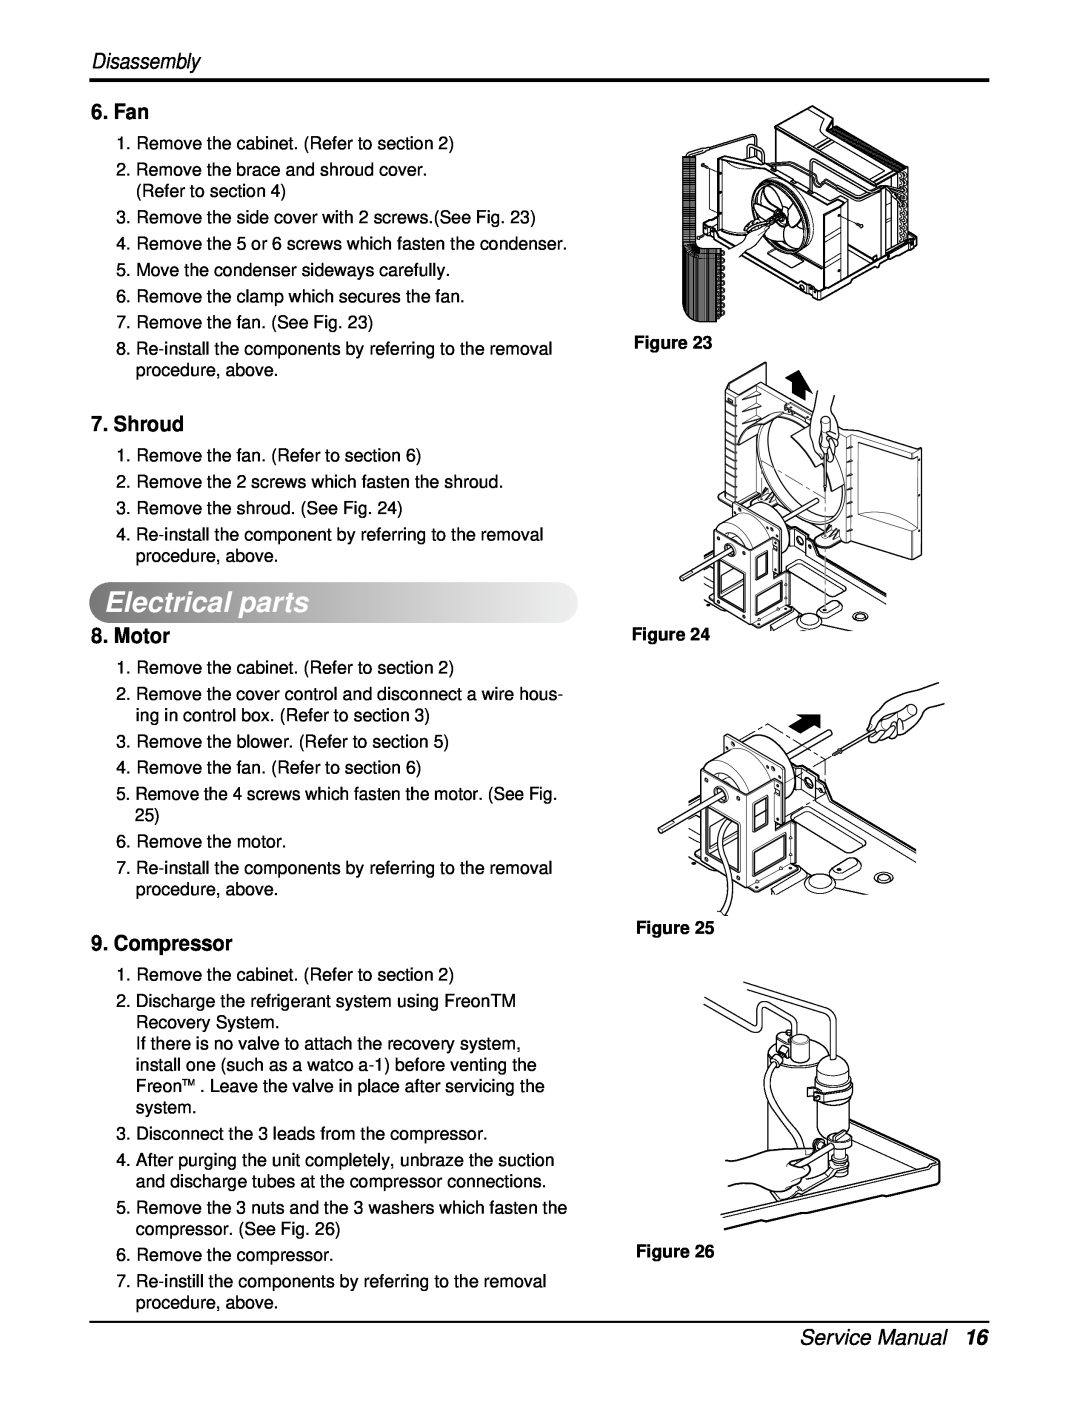 Heat Controller REG-183A, REG-243A manual Electricalparts, Fan, Shroud, Motor, Compressor, Disassembly 